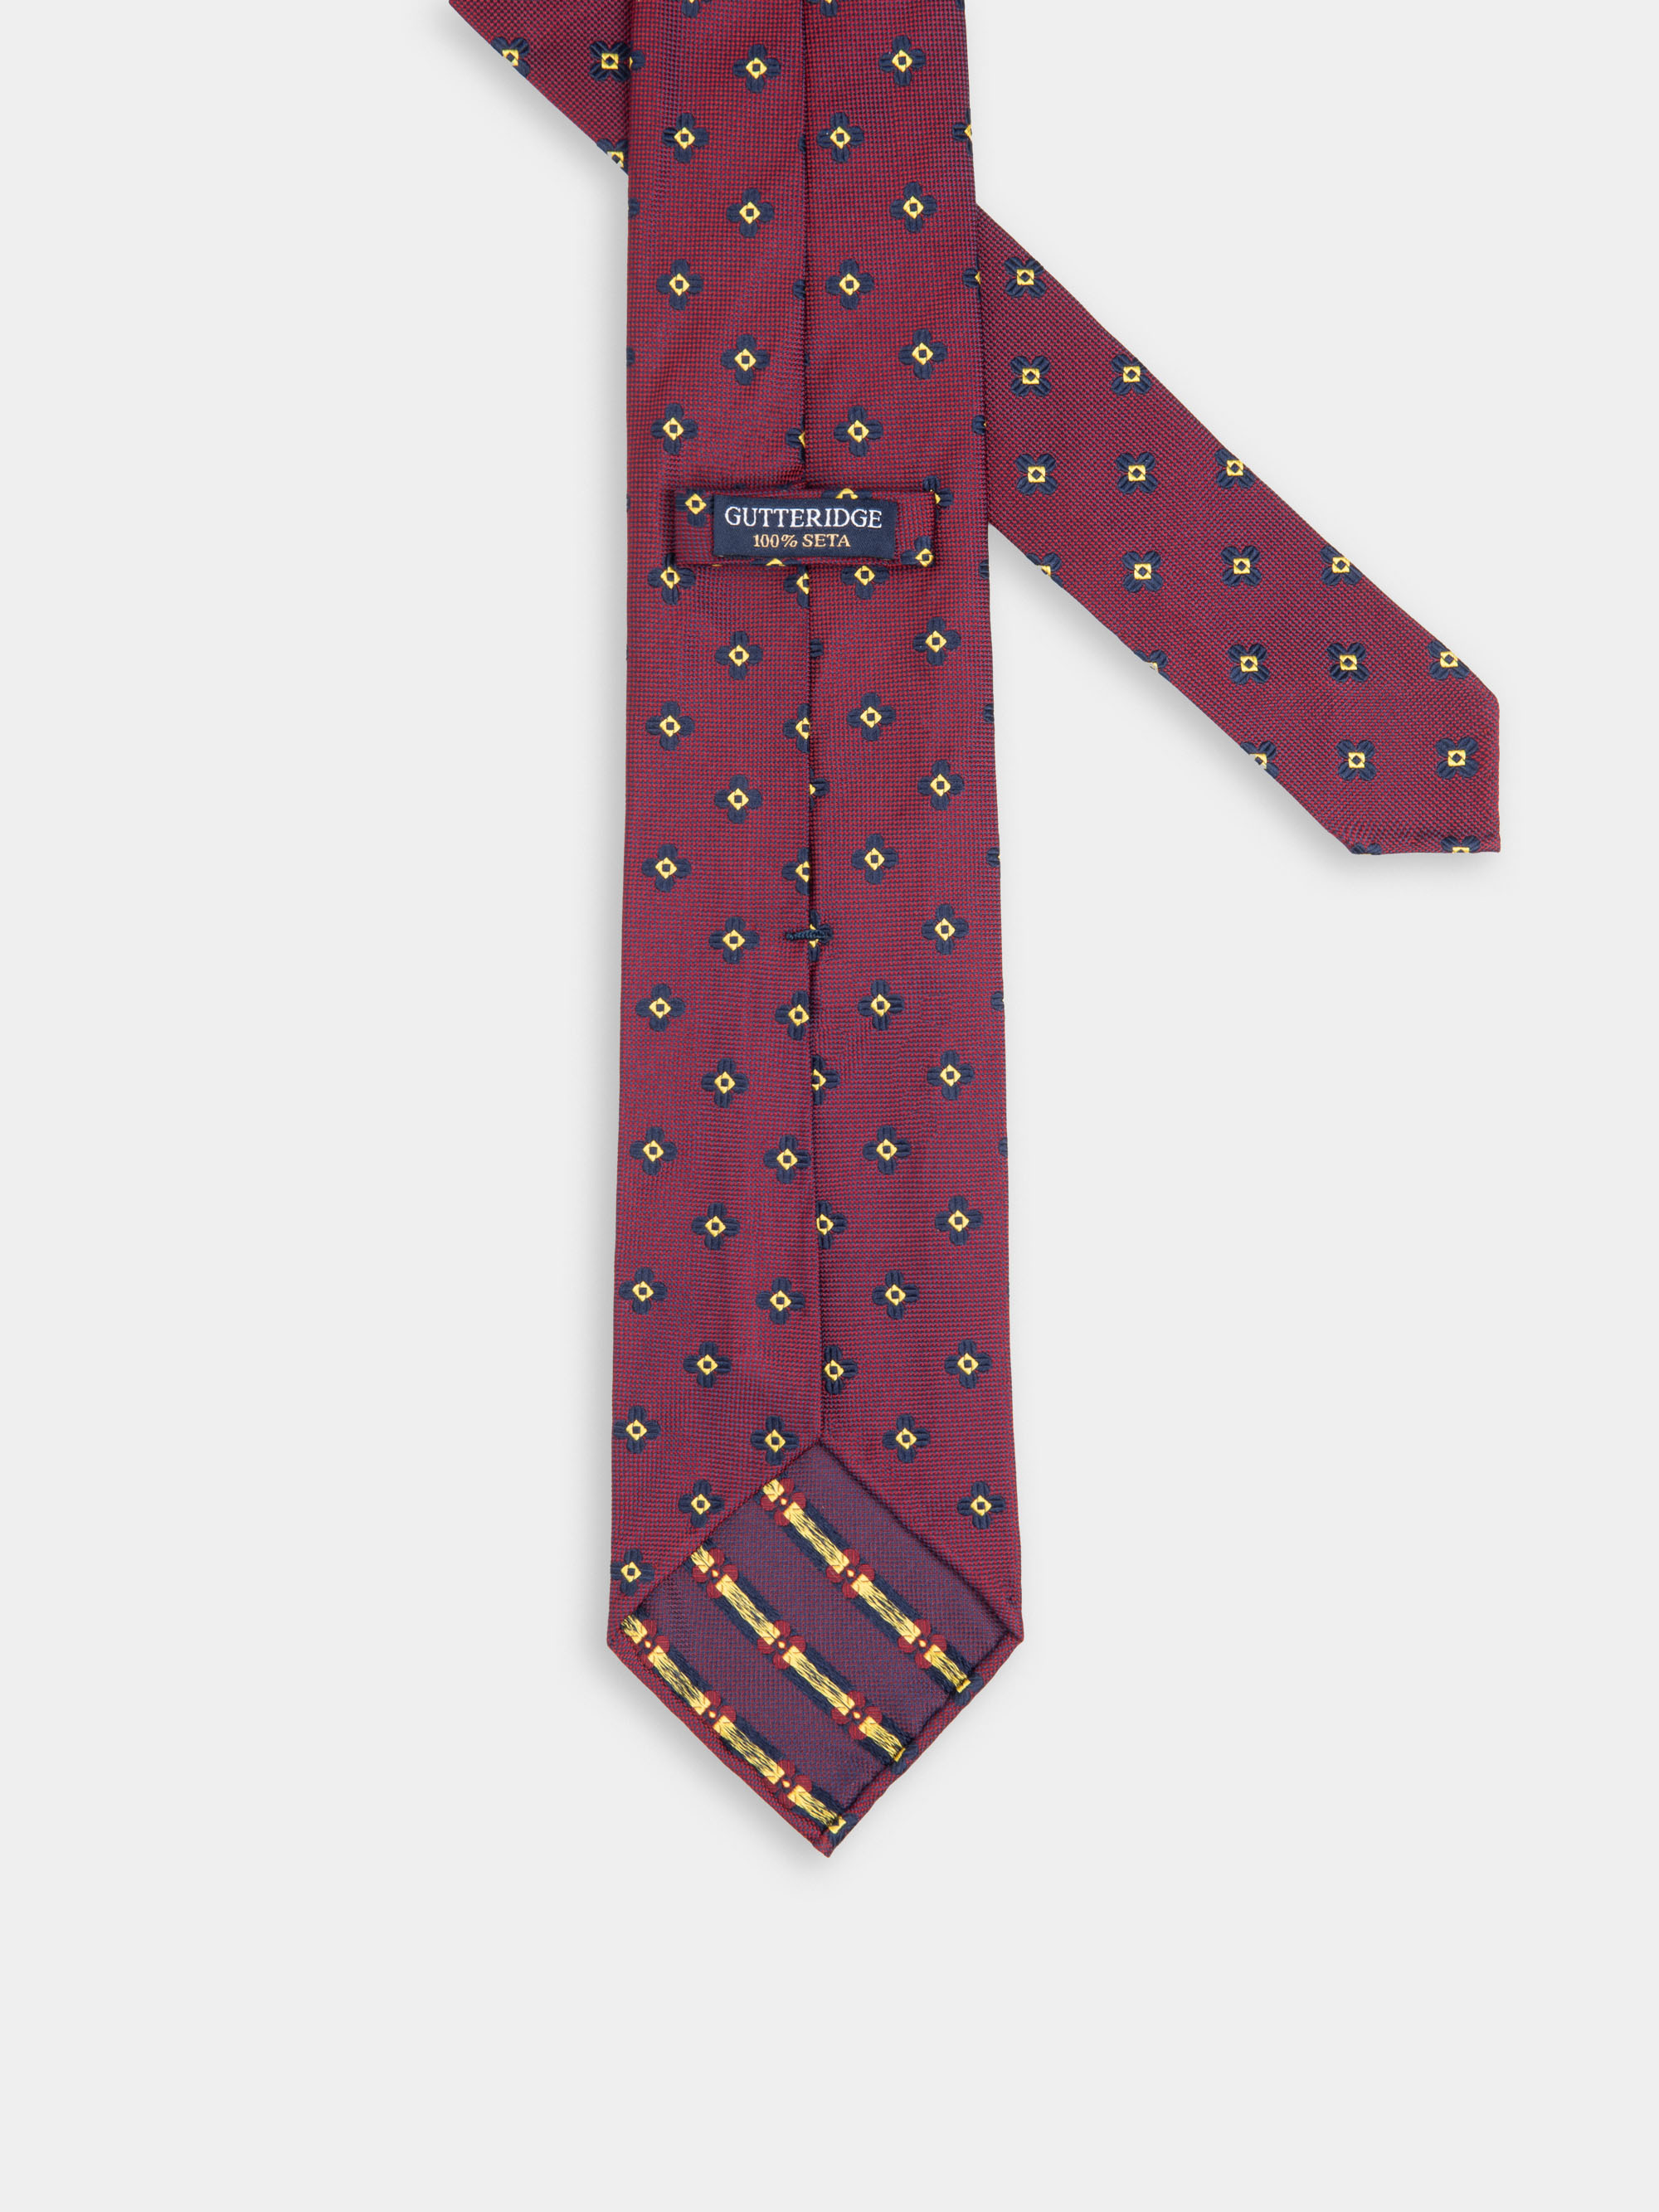 Cravatta in seta con motivo jacquard | Gutteridge | Cravatte Uomo